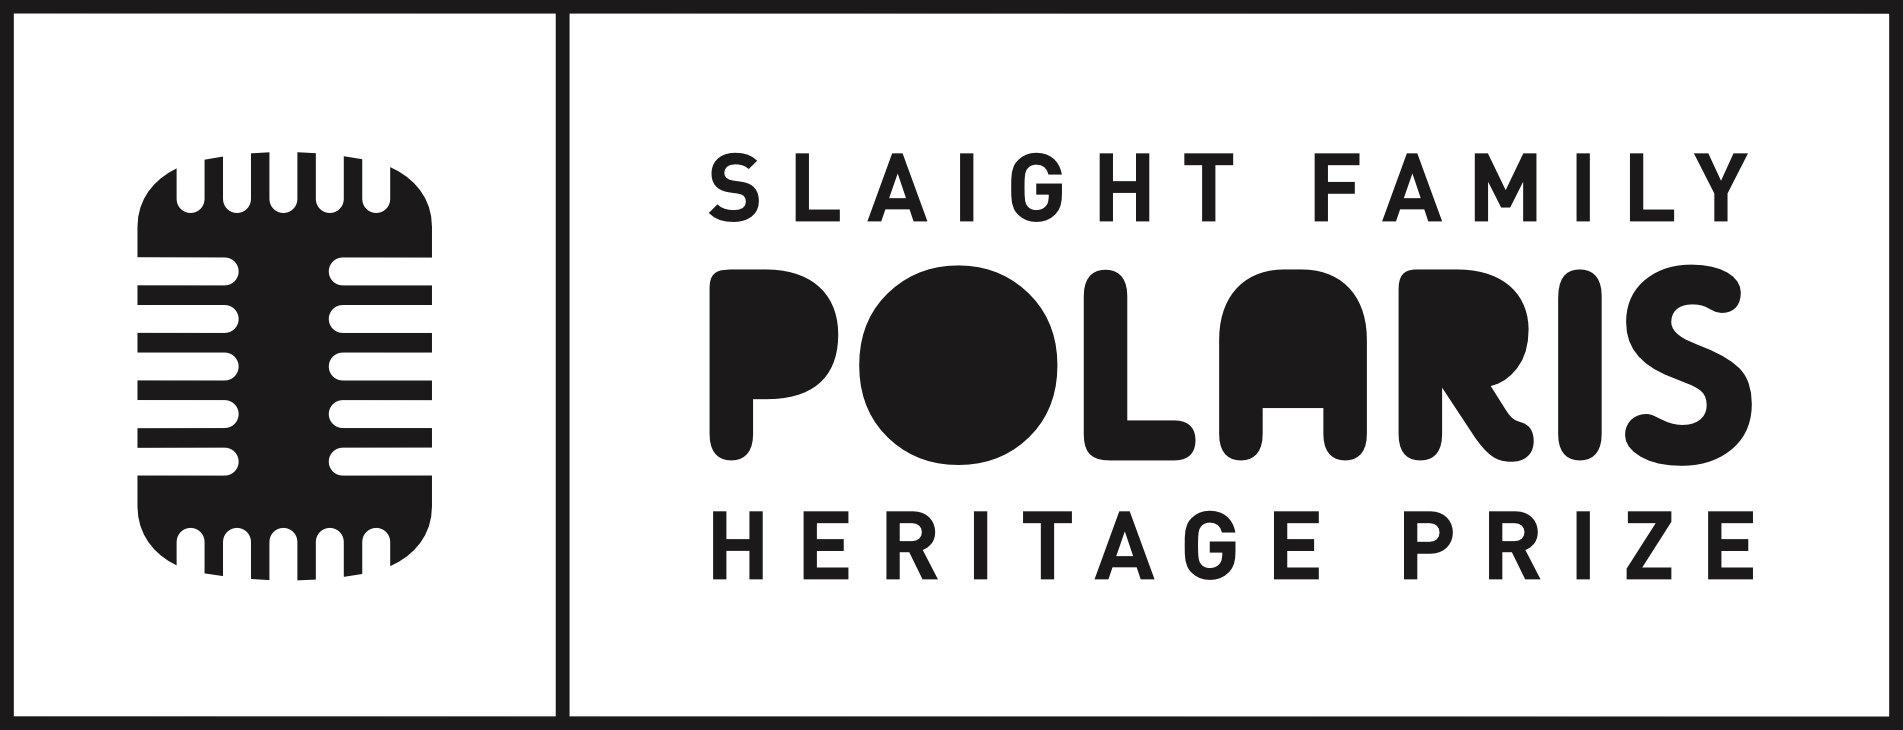 Slaight Family Polaris Heritage Prize 